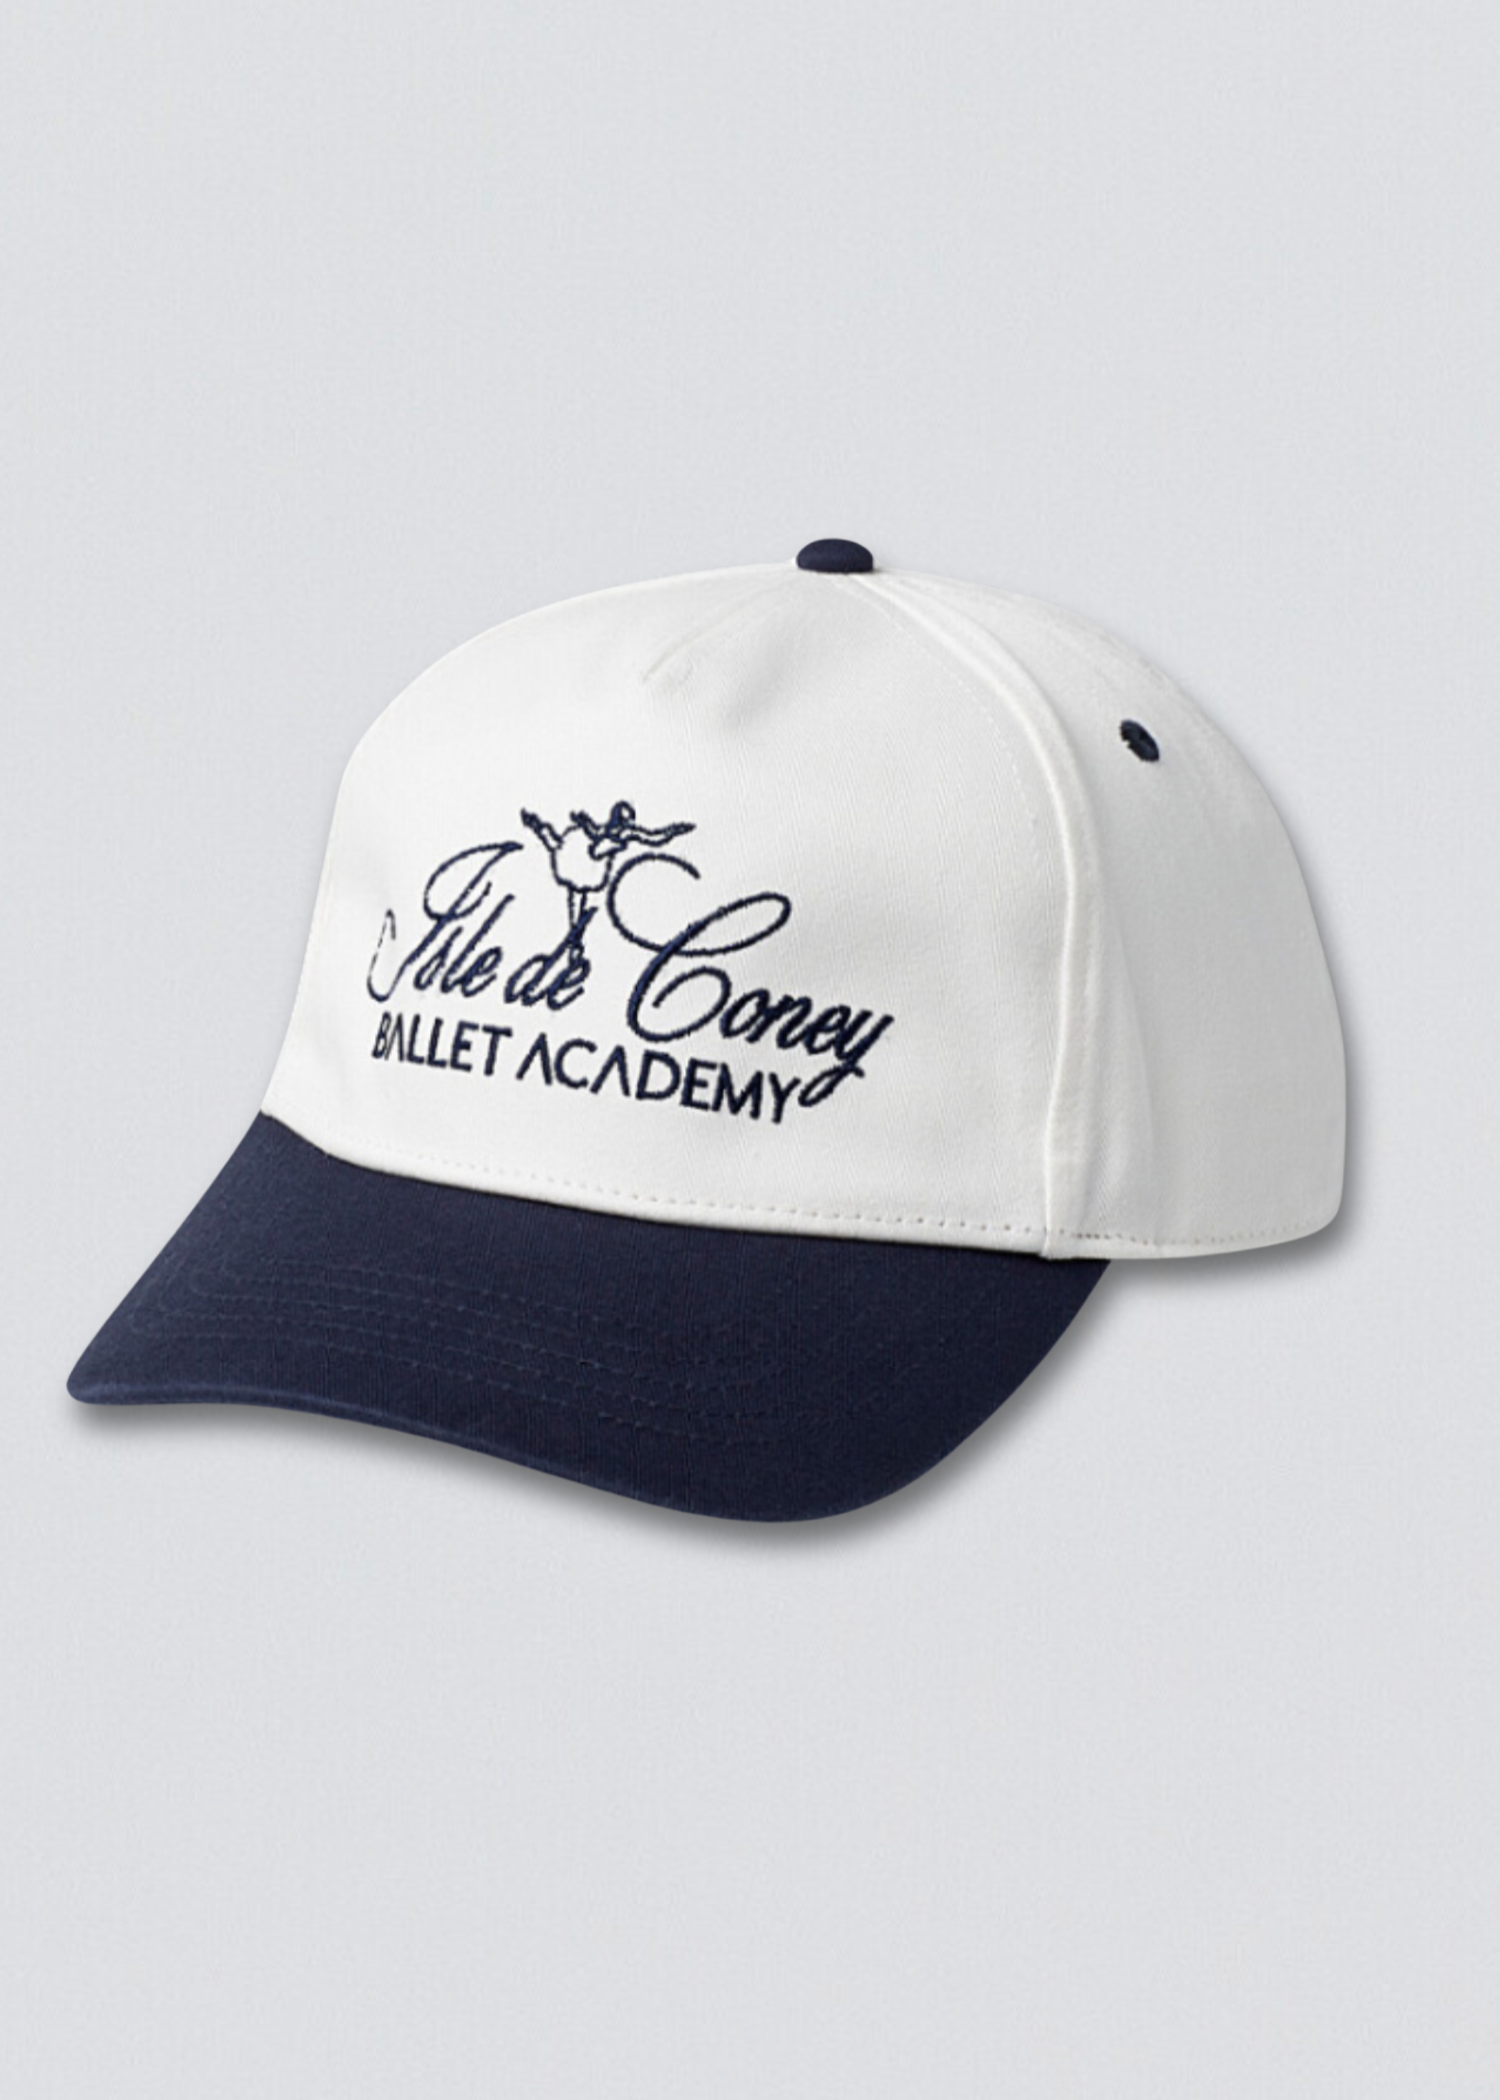 Isle de Coney Ballet Academy Twill Snapback Hat